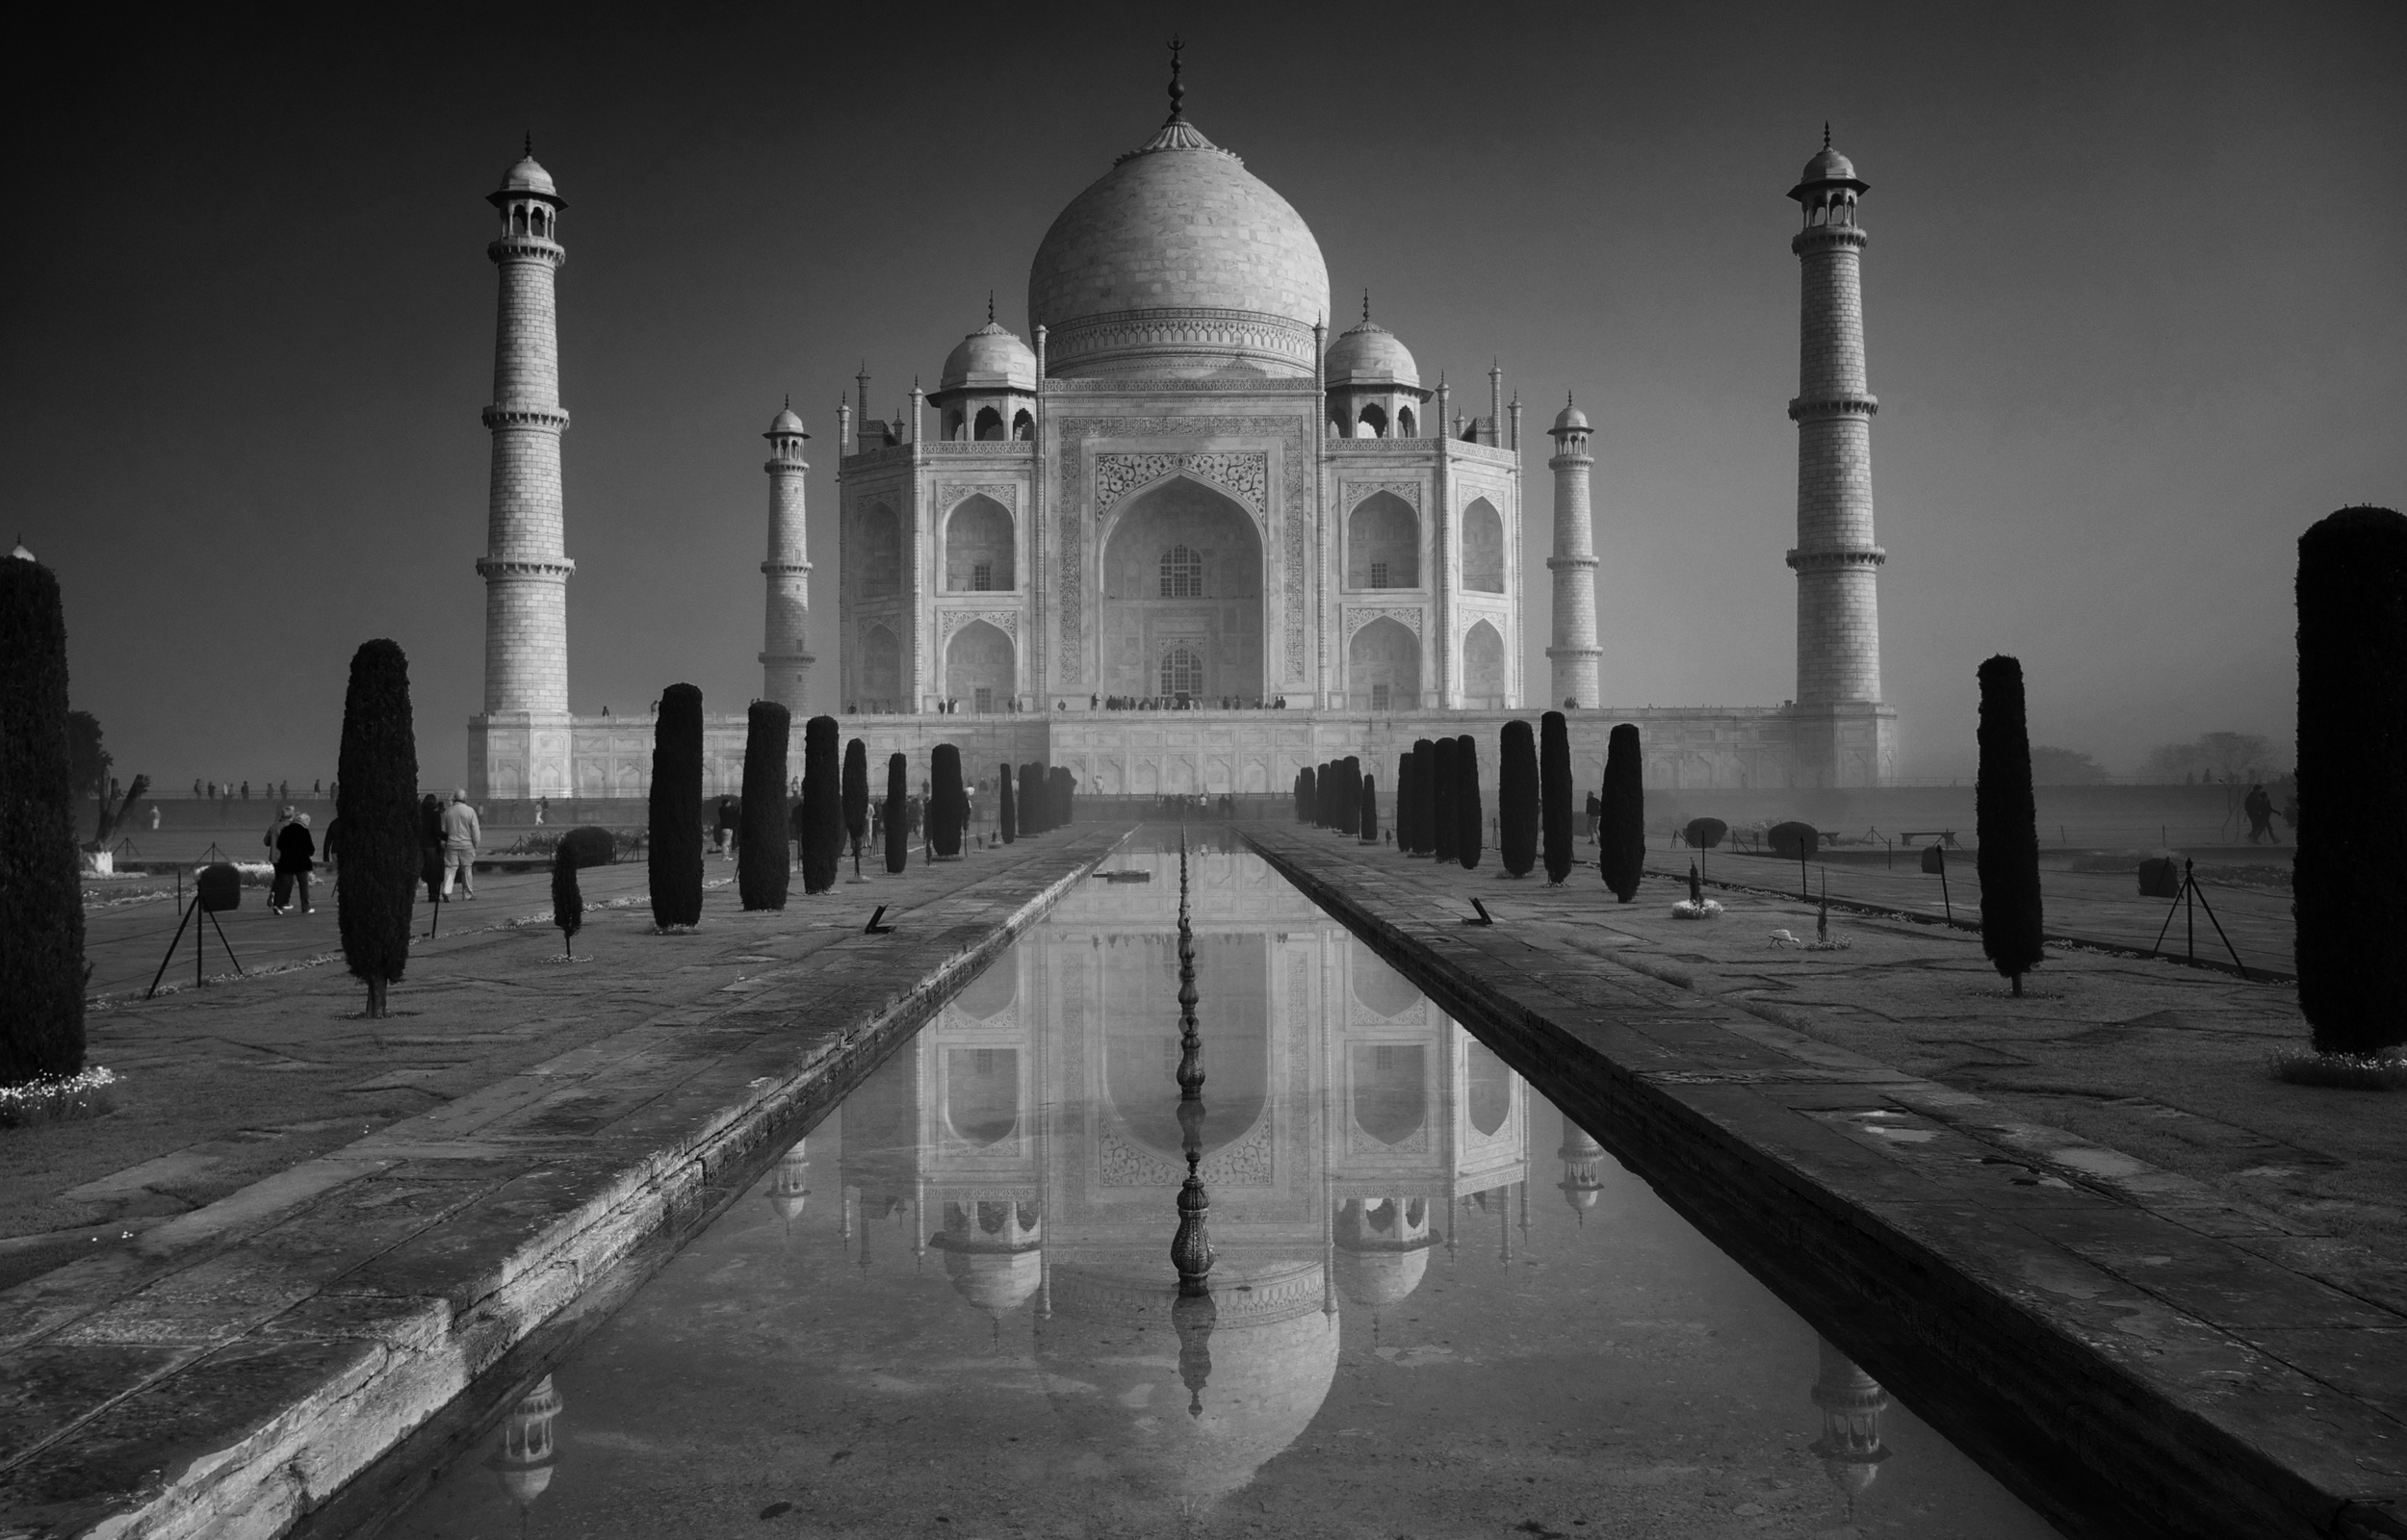    Agra's Taj Mahal   